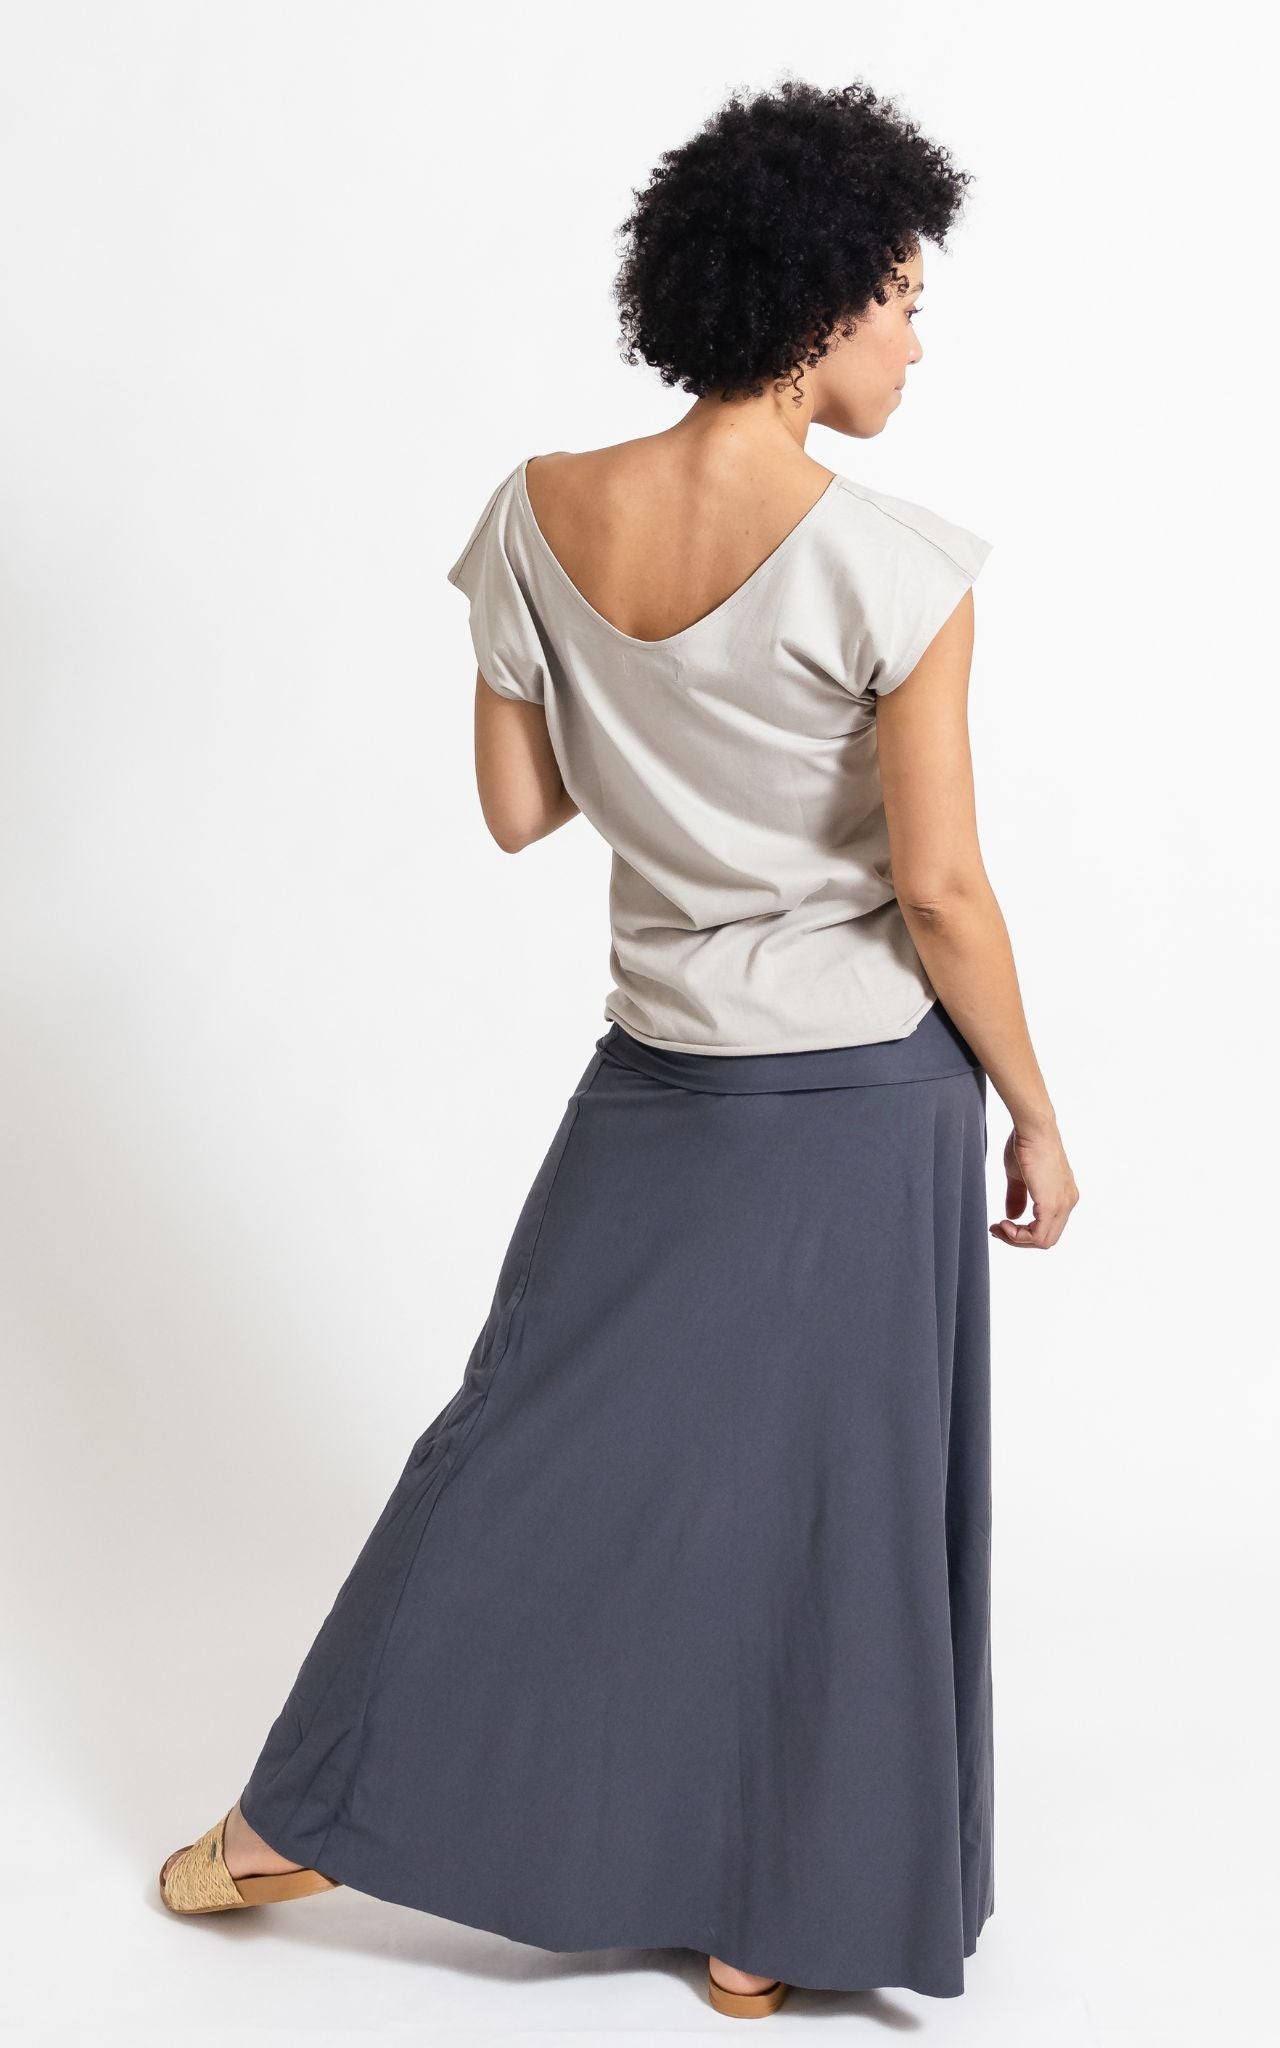 Surya Australia Ethical Organic Cotton Skirt made in Nepal - Dusty Grey